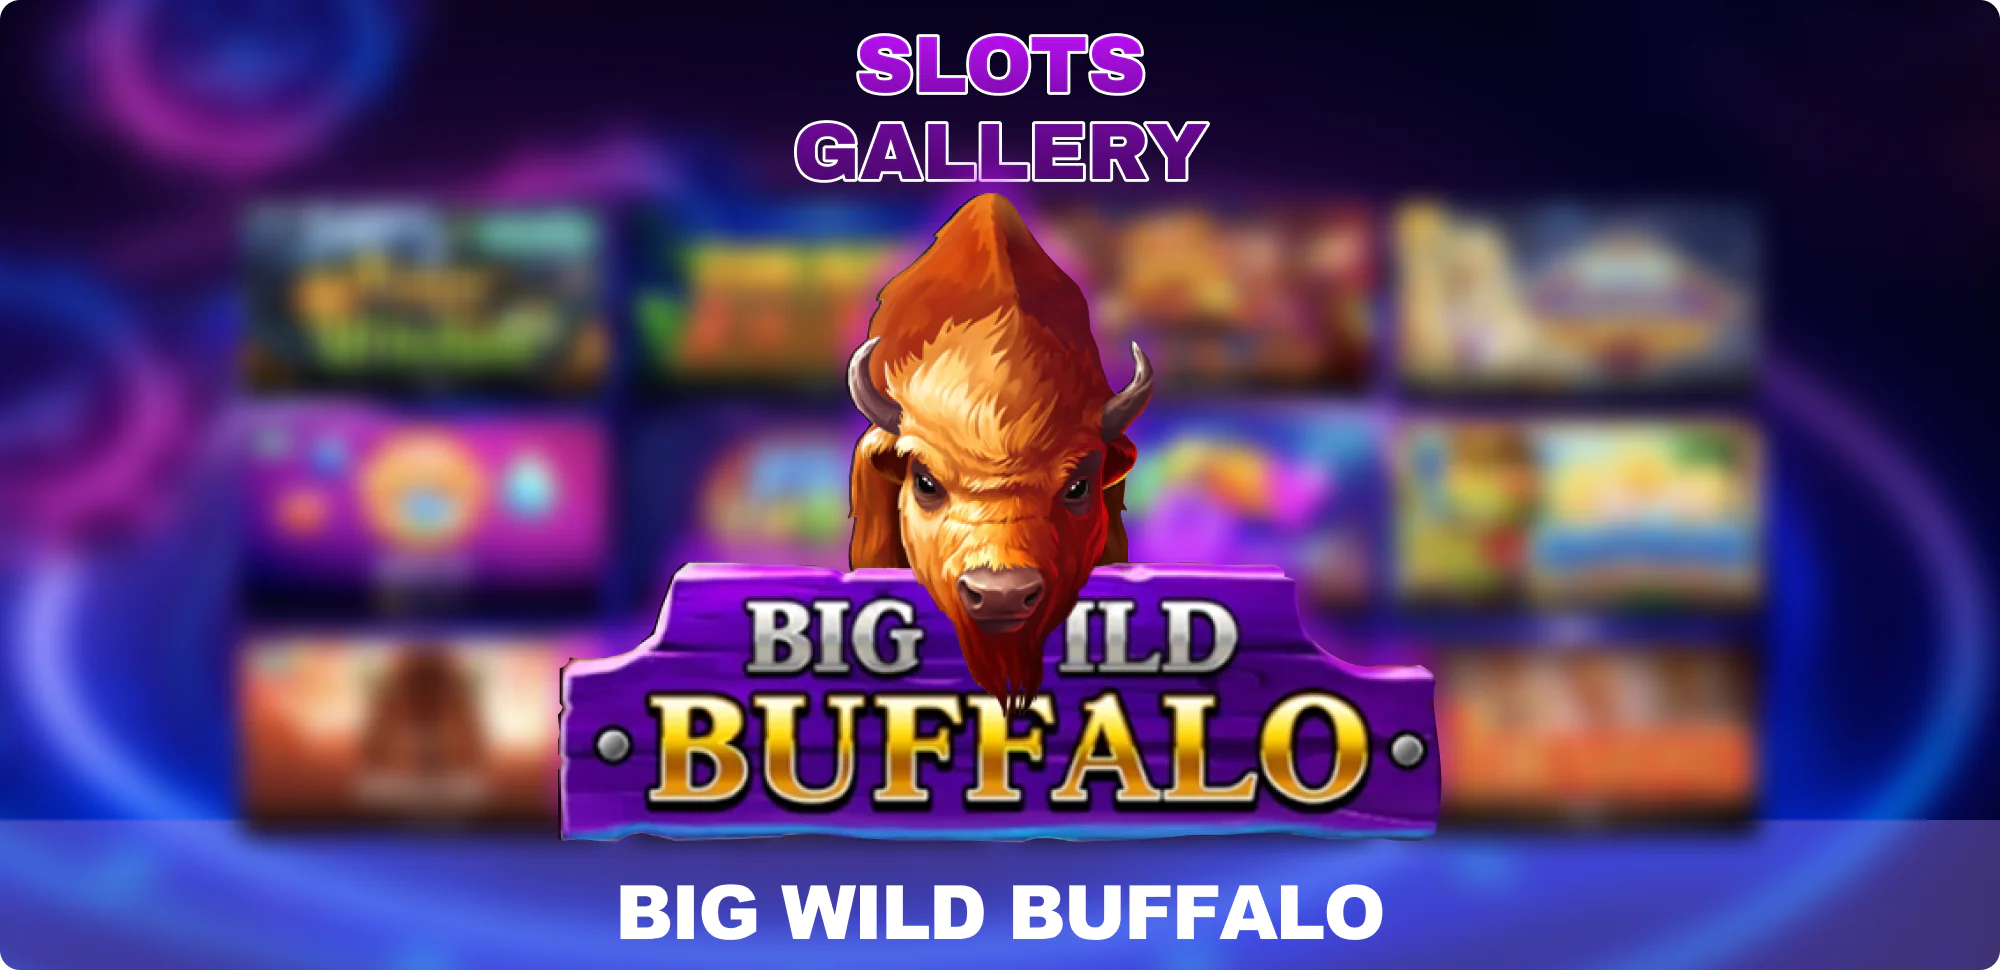 Big Wild Buffalo - Slots Gallery Casino